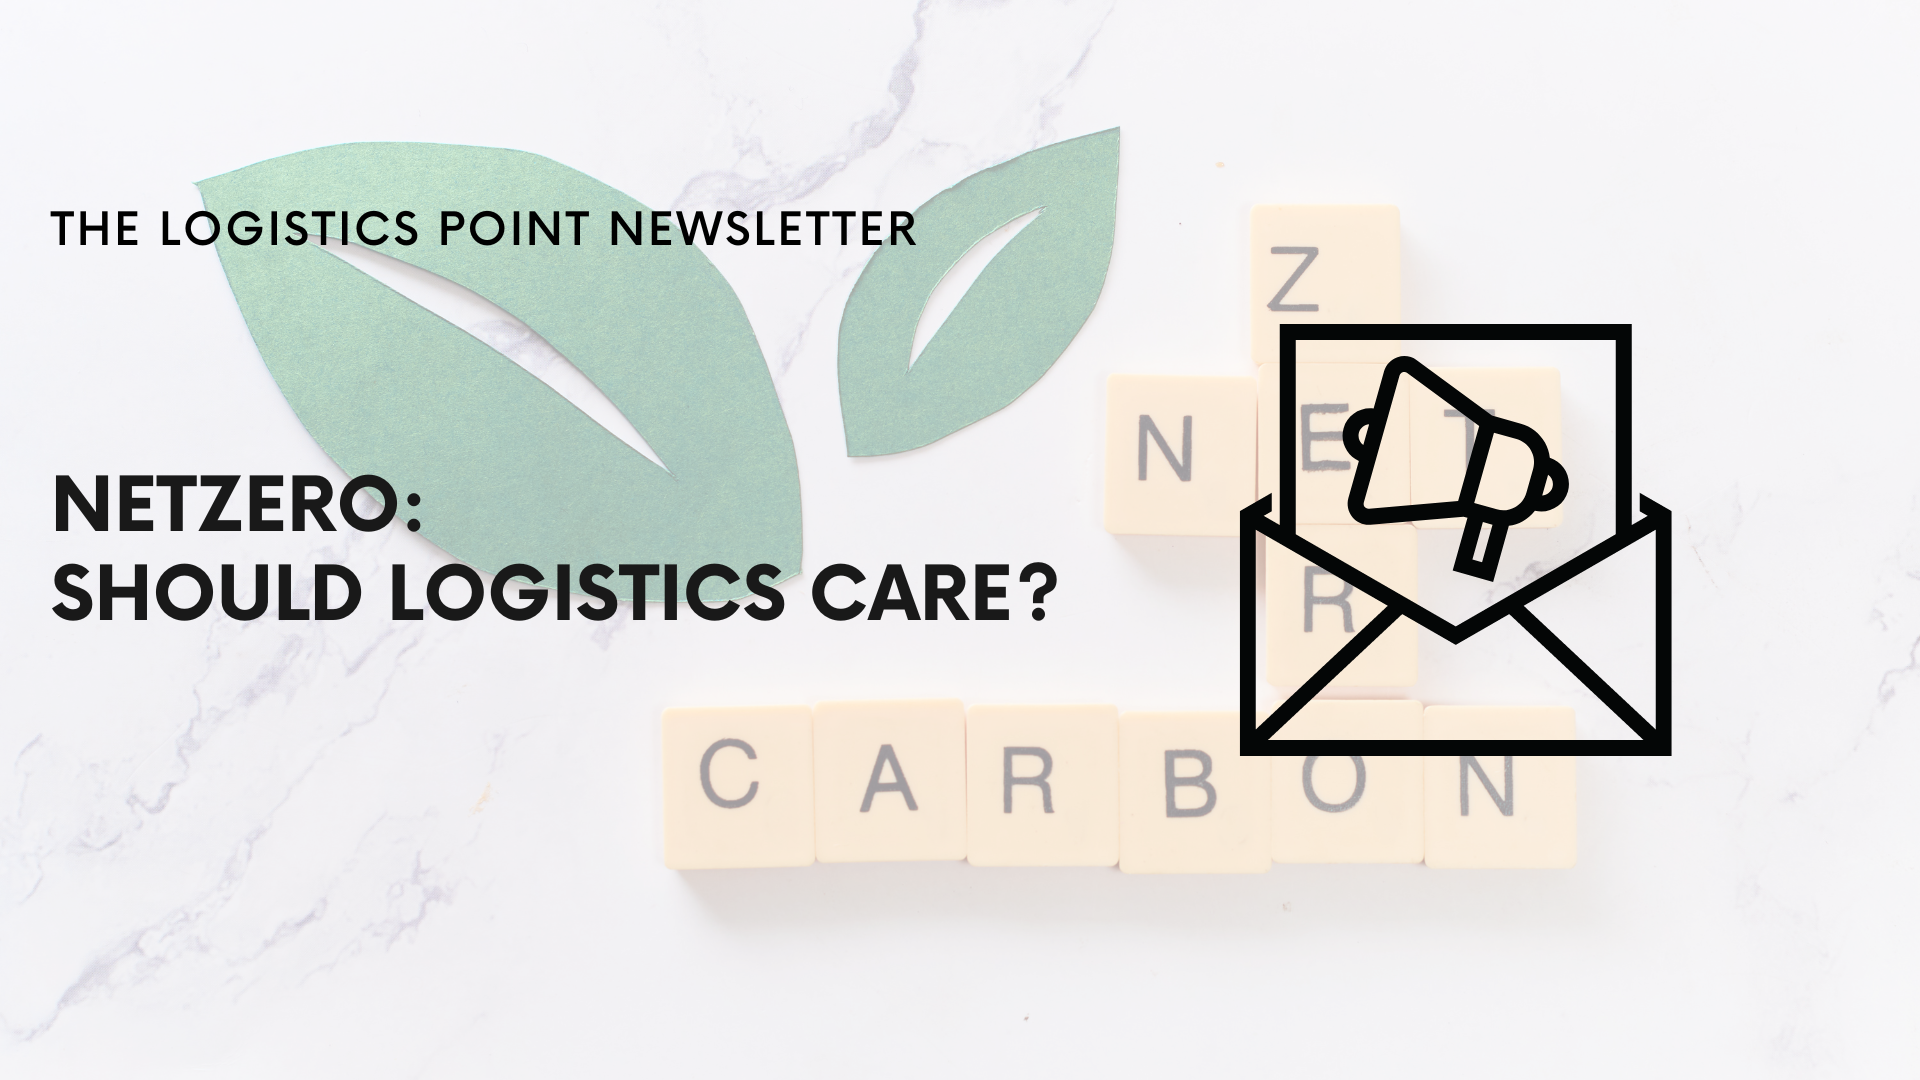 NetZero: Should Logistics Care?